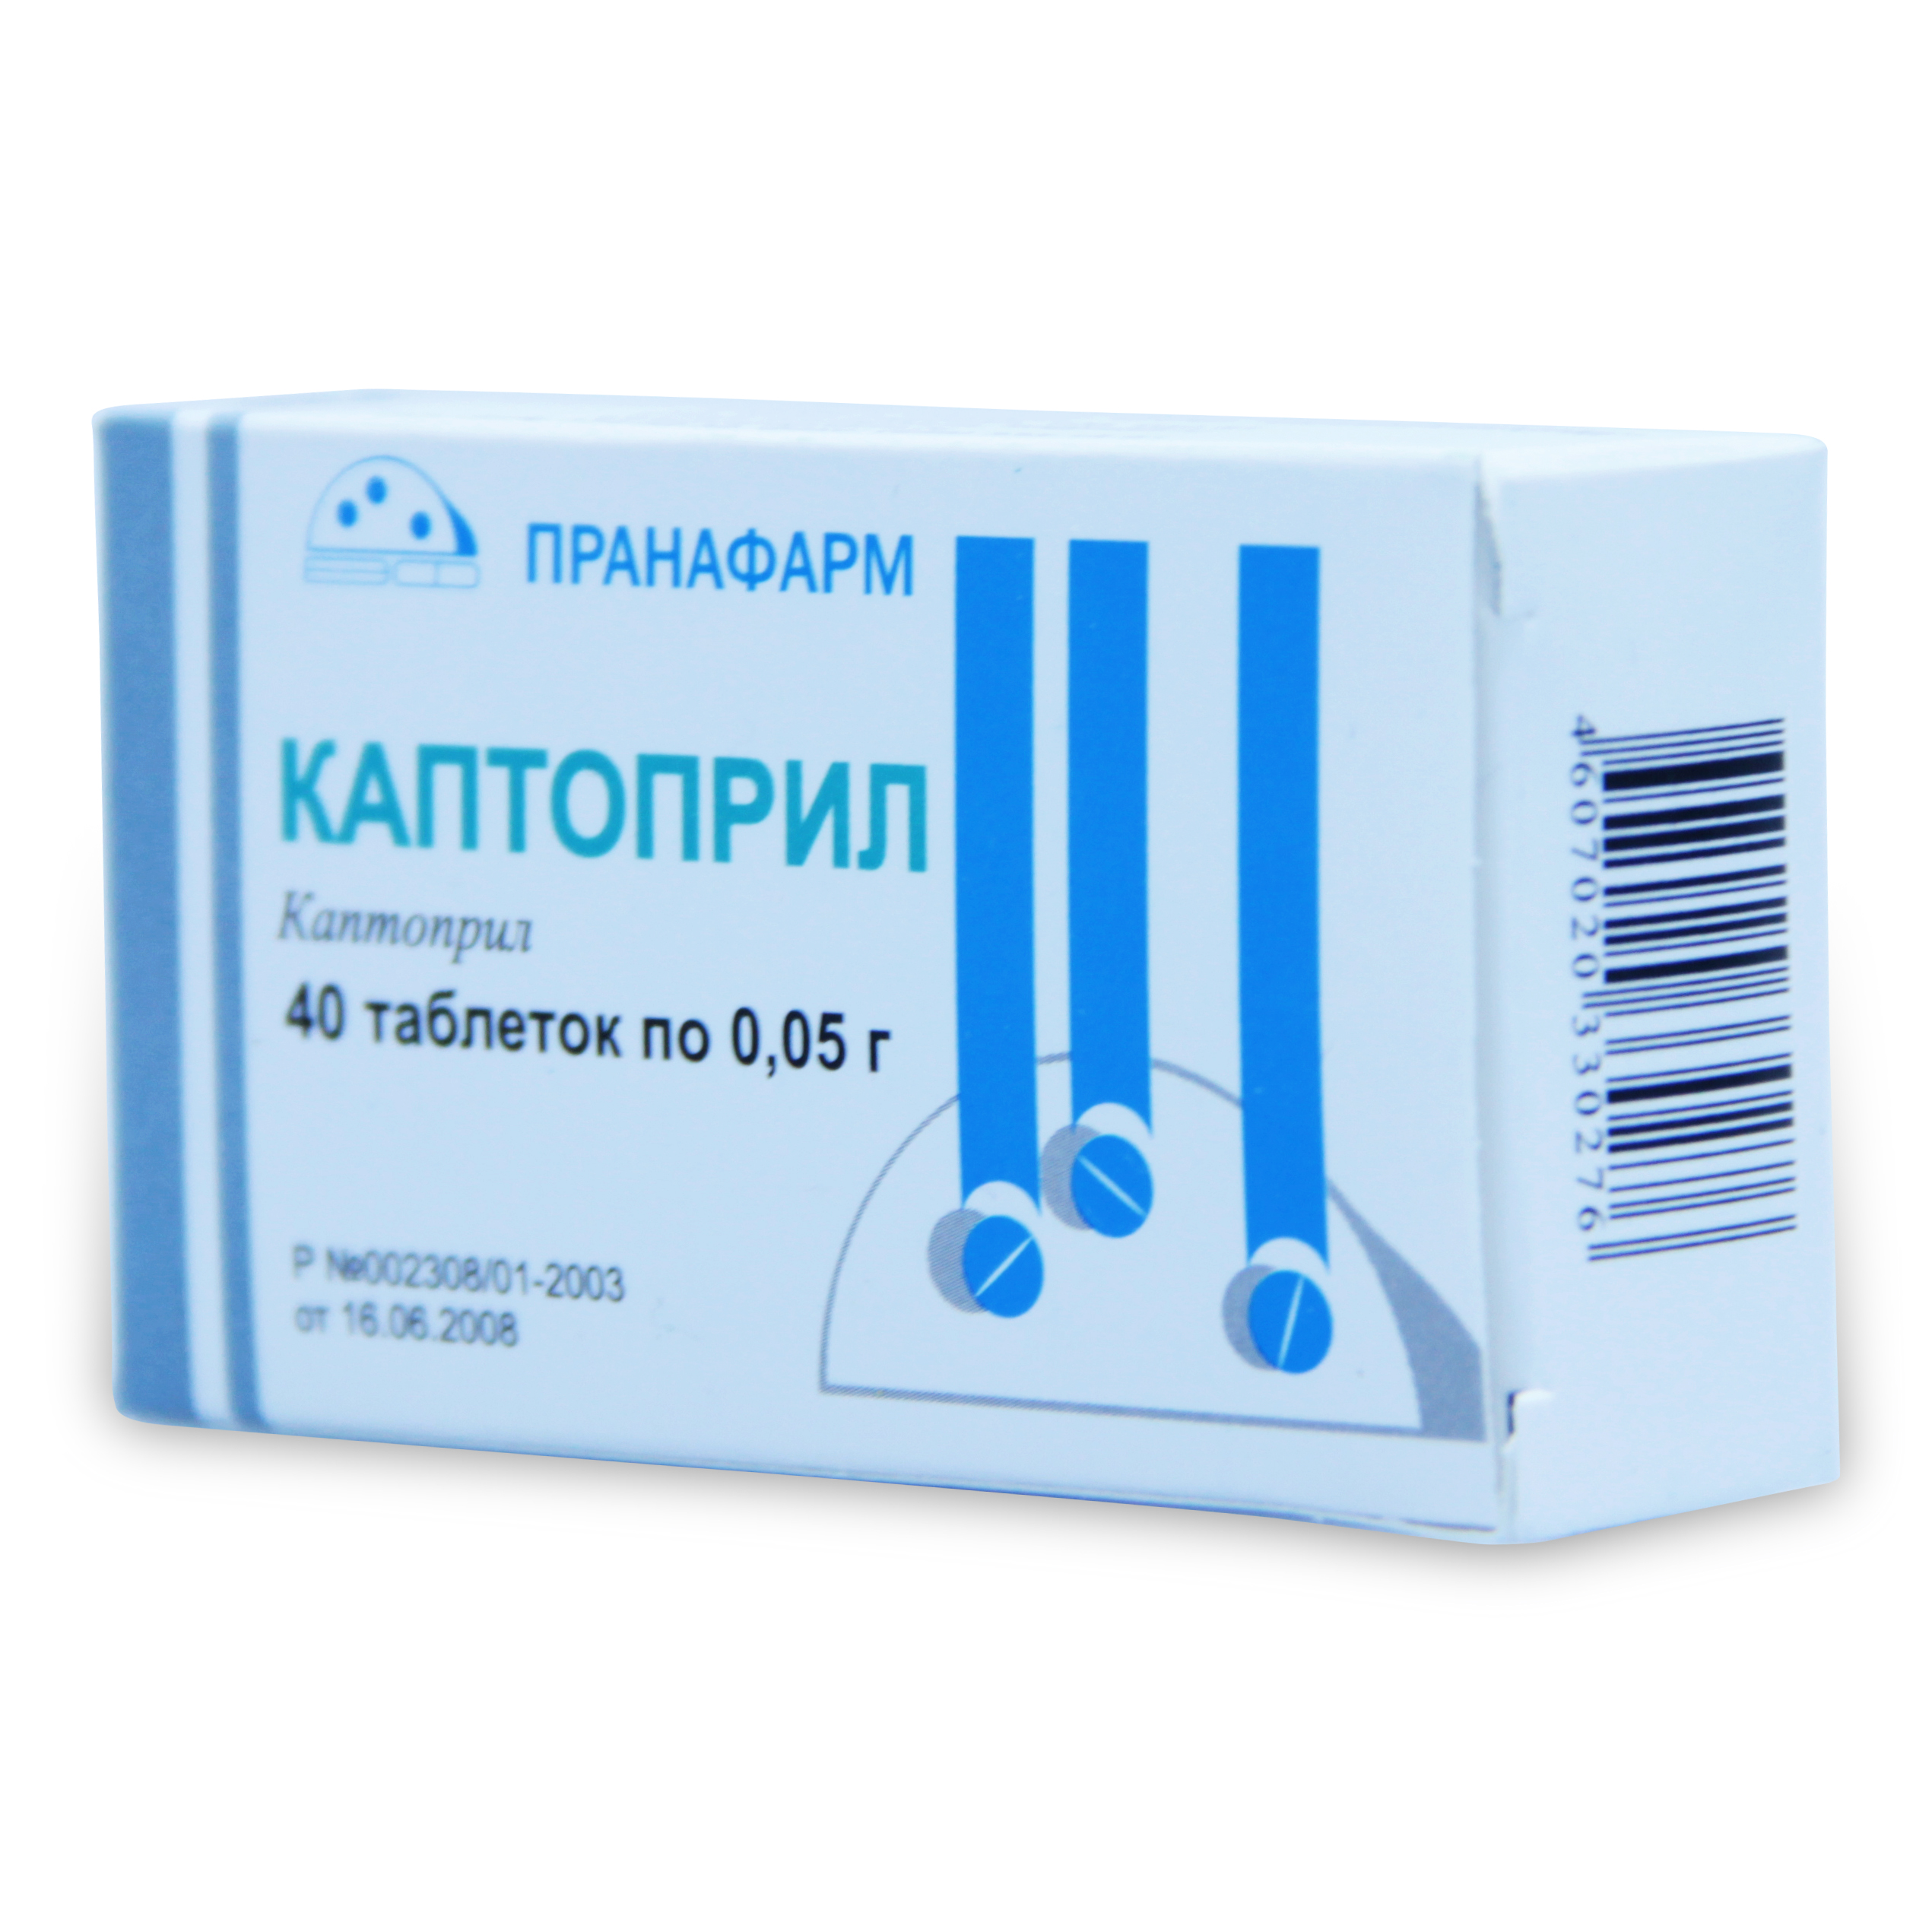 Купить Каптоприл таблетки 50 мг 40 шт., Пранафарм